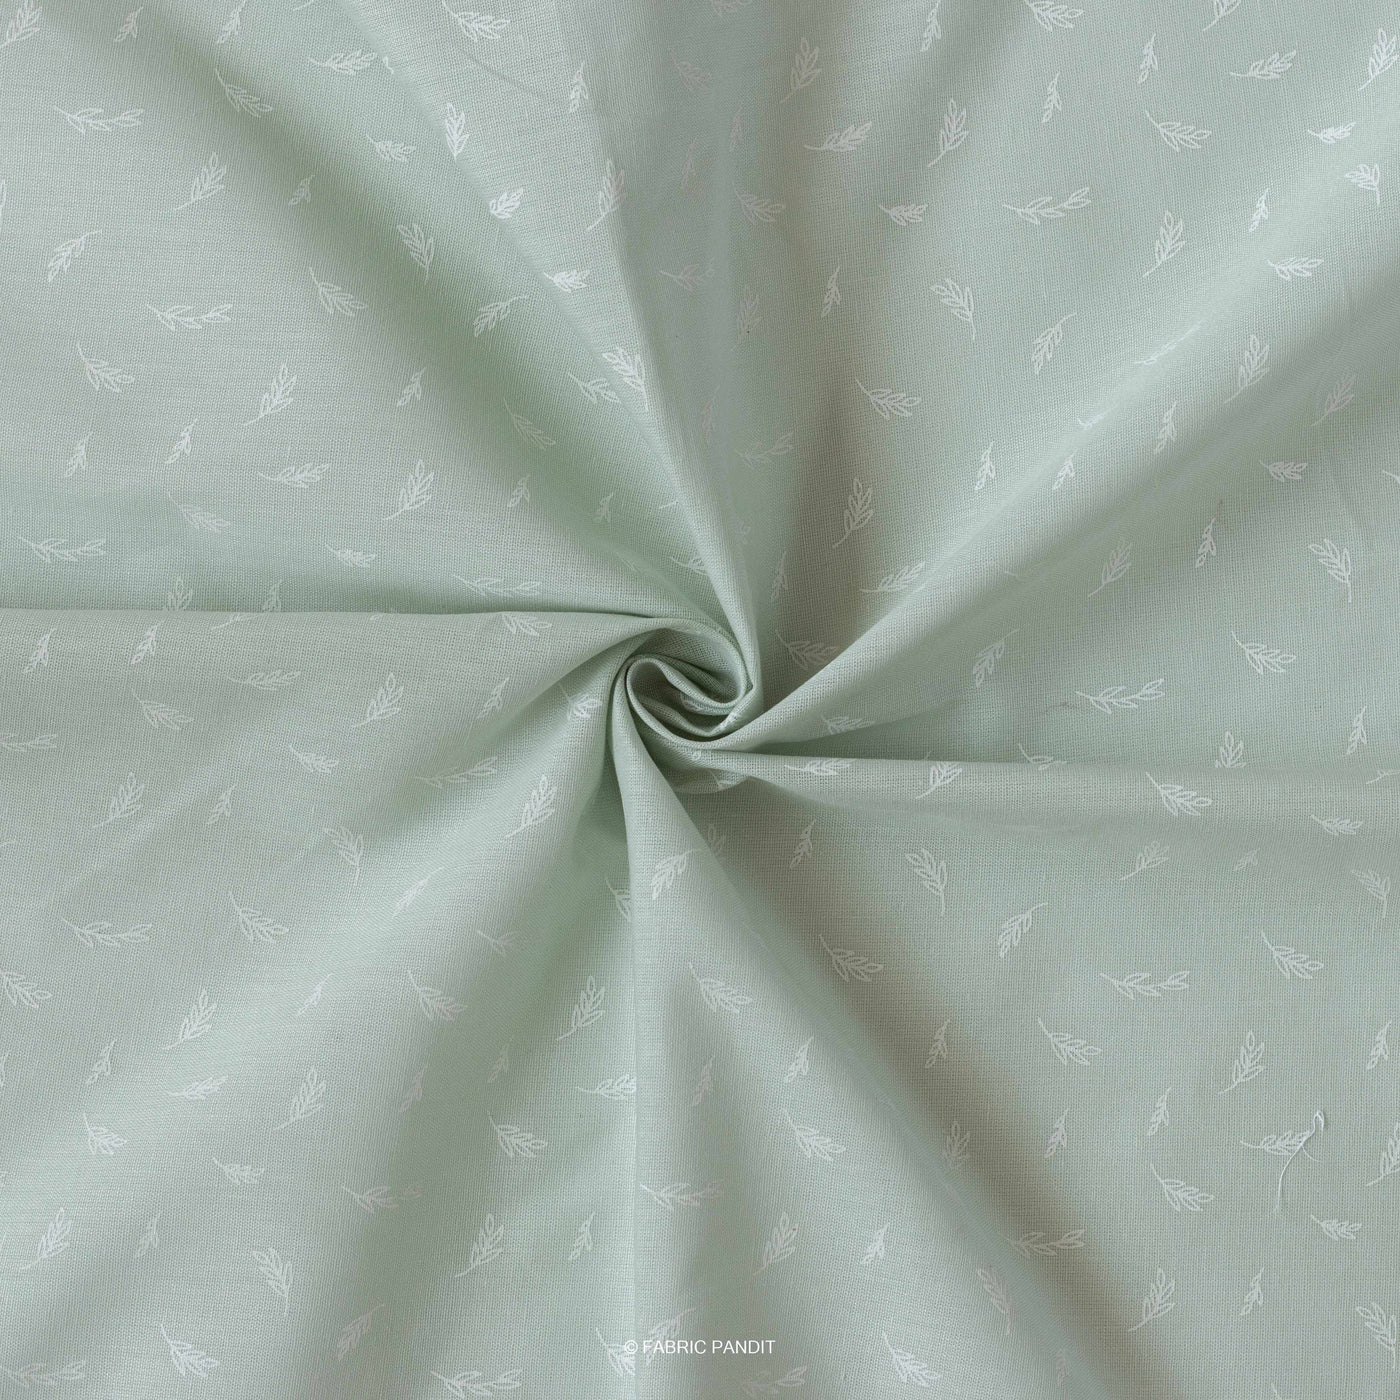 Fabric Pandit Cut Piece (CUT PIECE) Light Aqua Marine Color Block Printed Cotton Linen Fabric (Width 42 Inches)